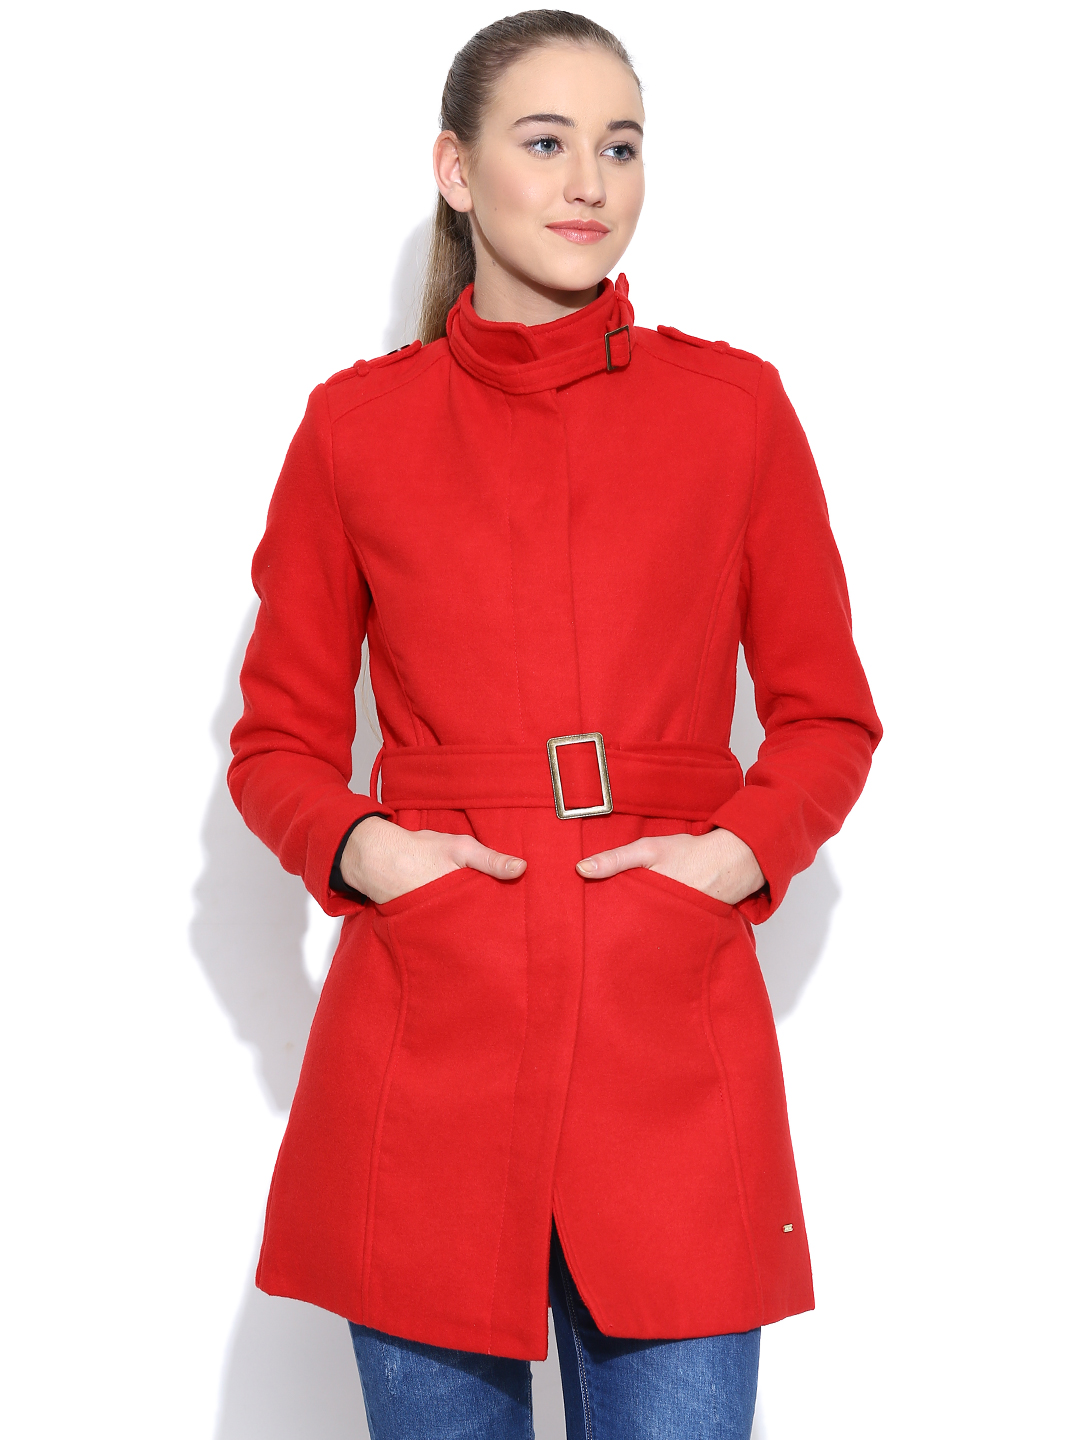 Red Coats - Buy Red Coats online in India